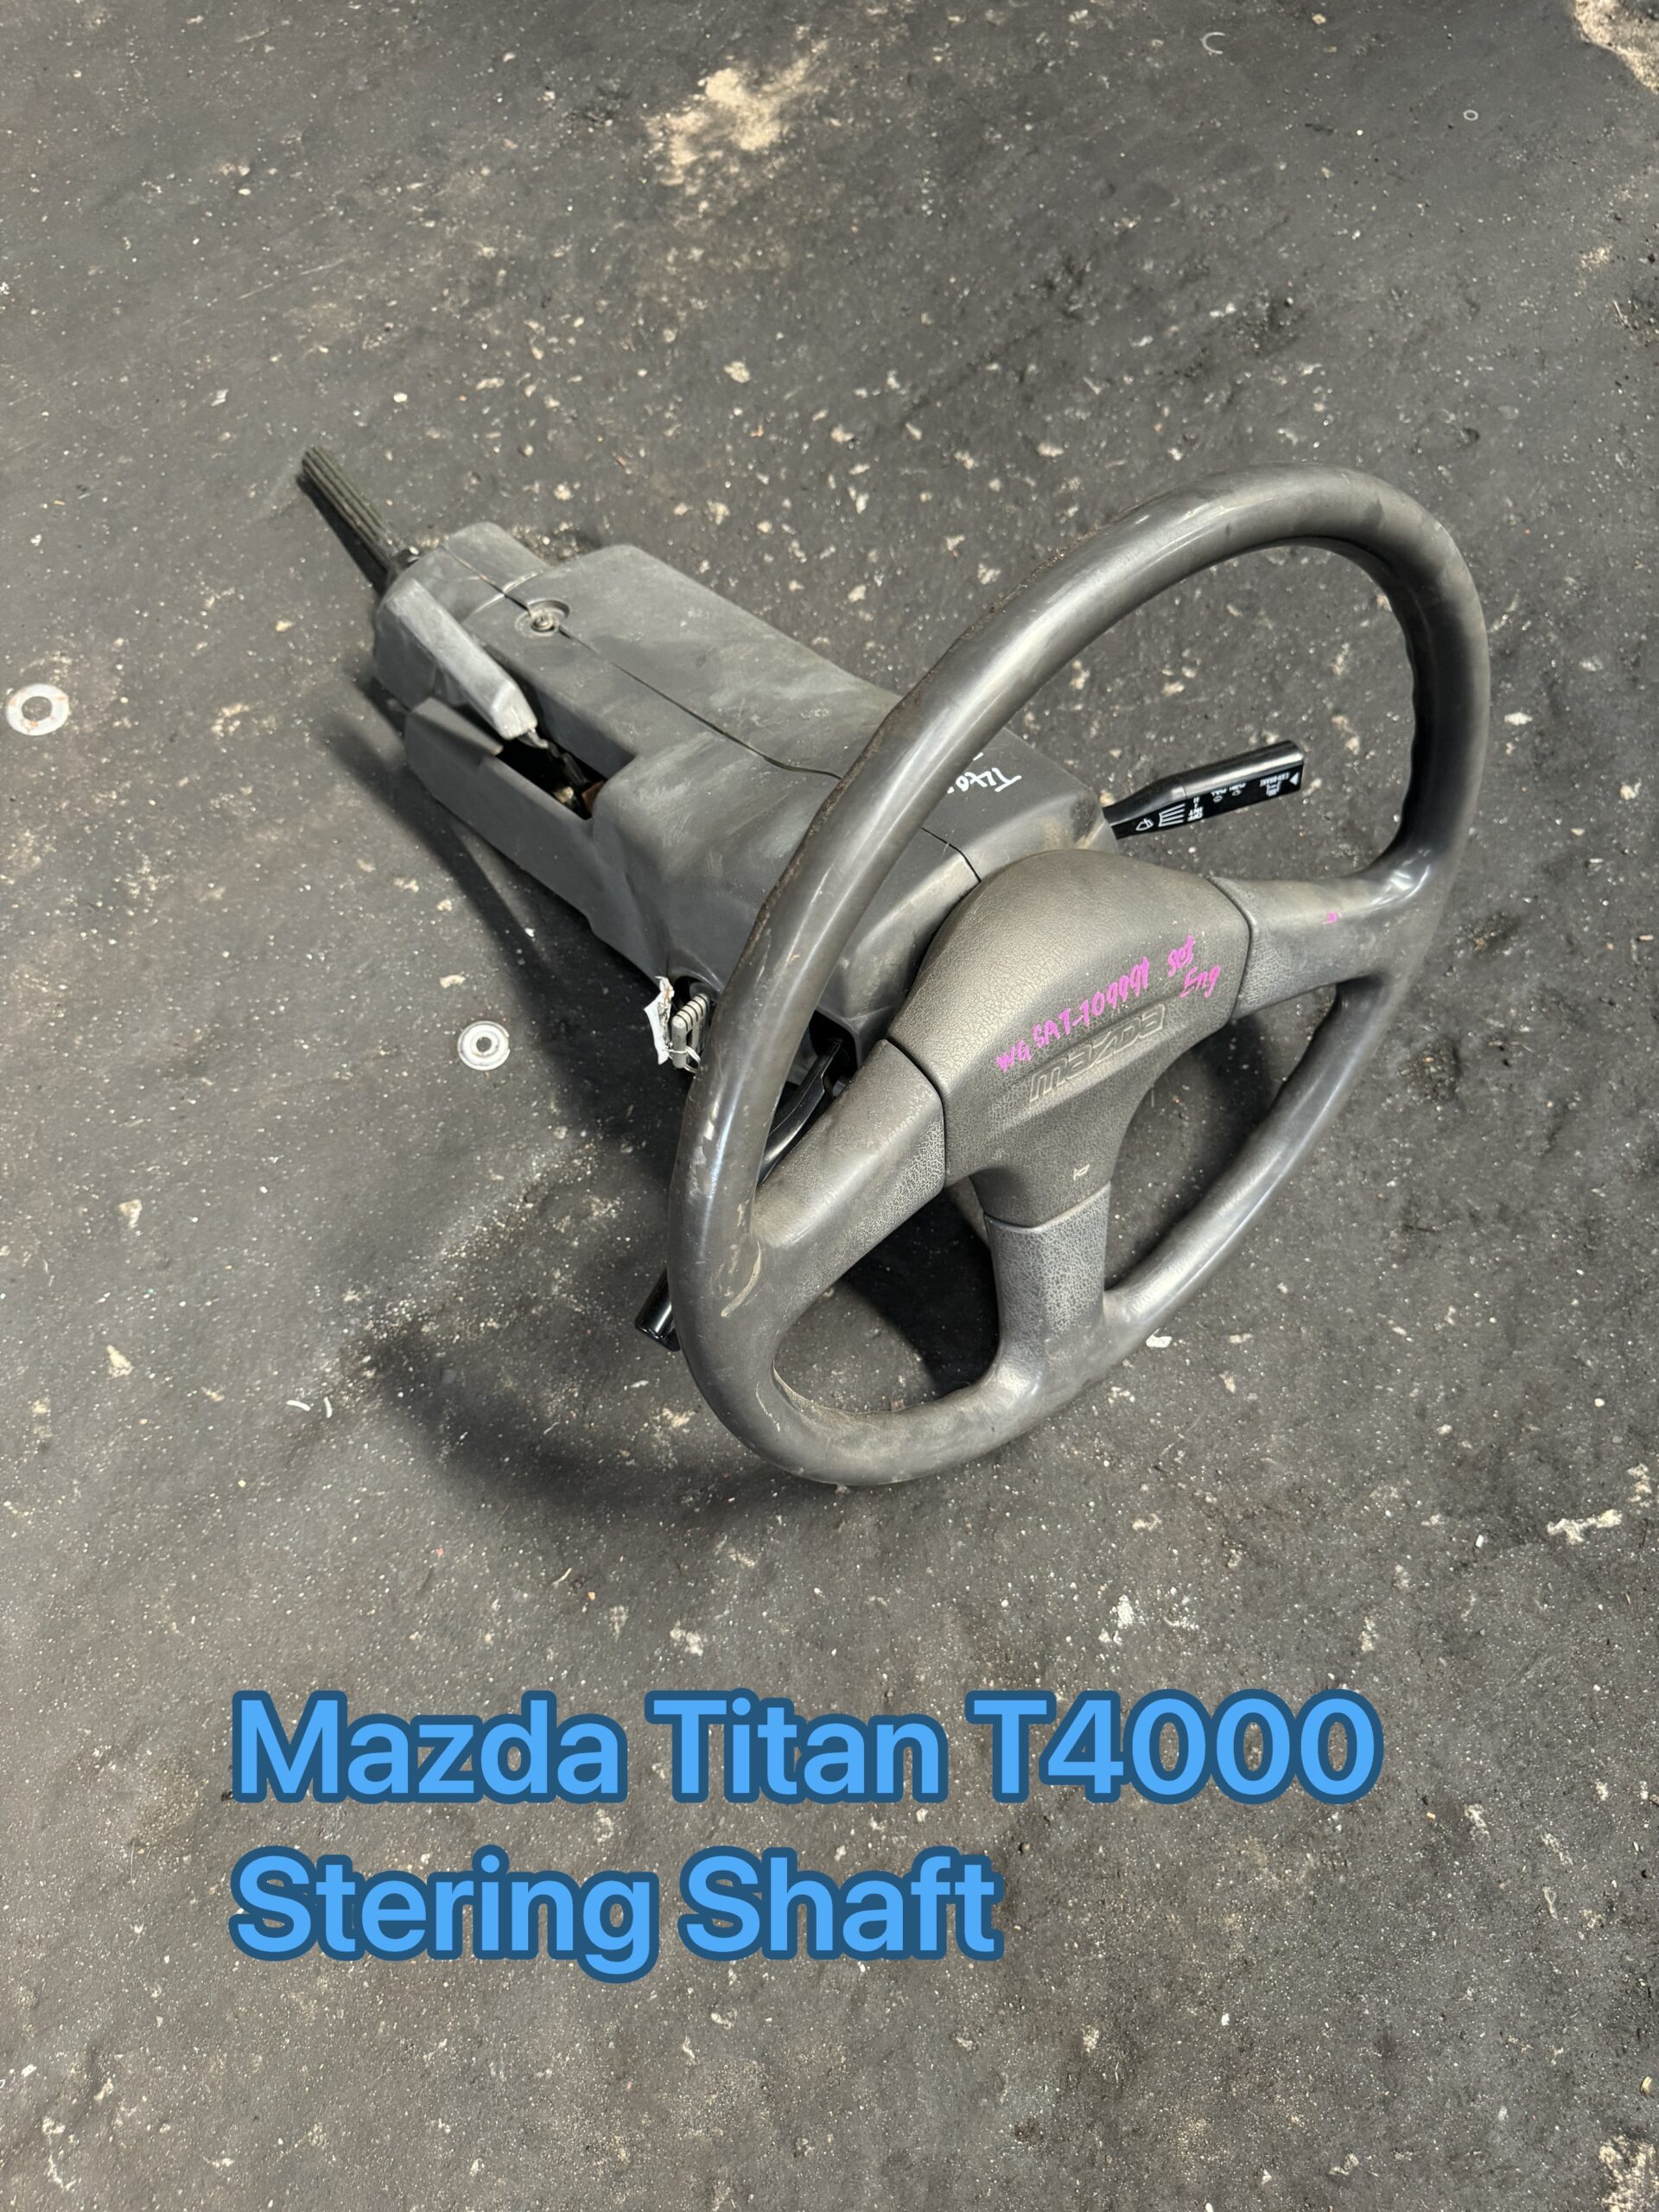 Mazda Titan T4000 Stering Shaft